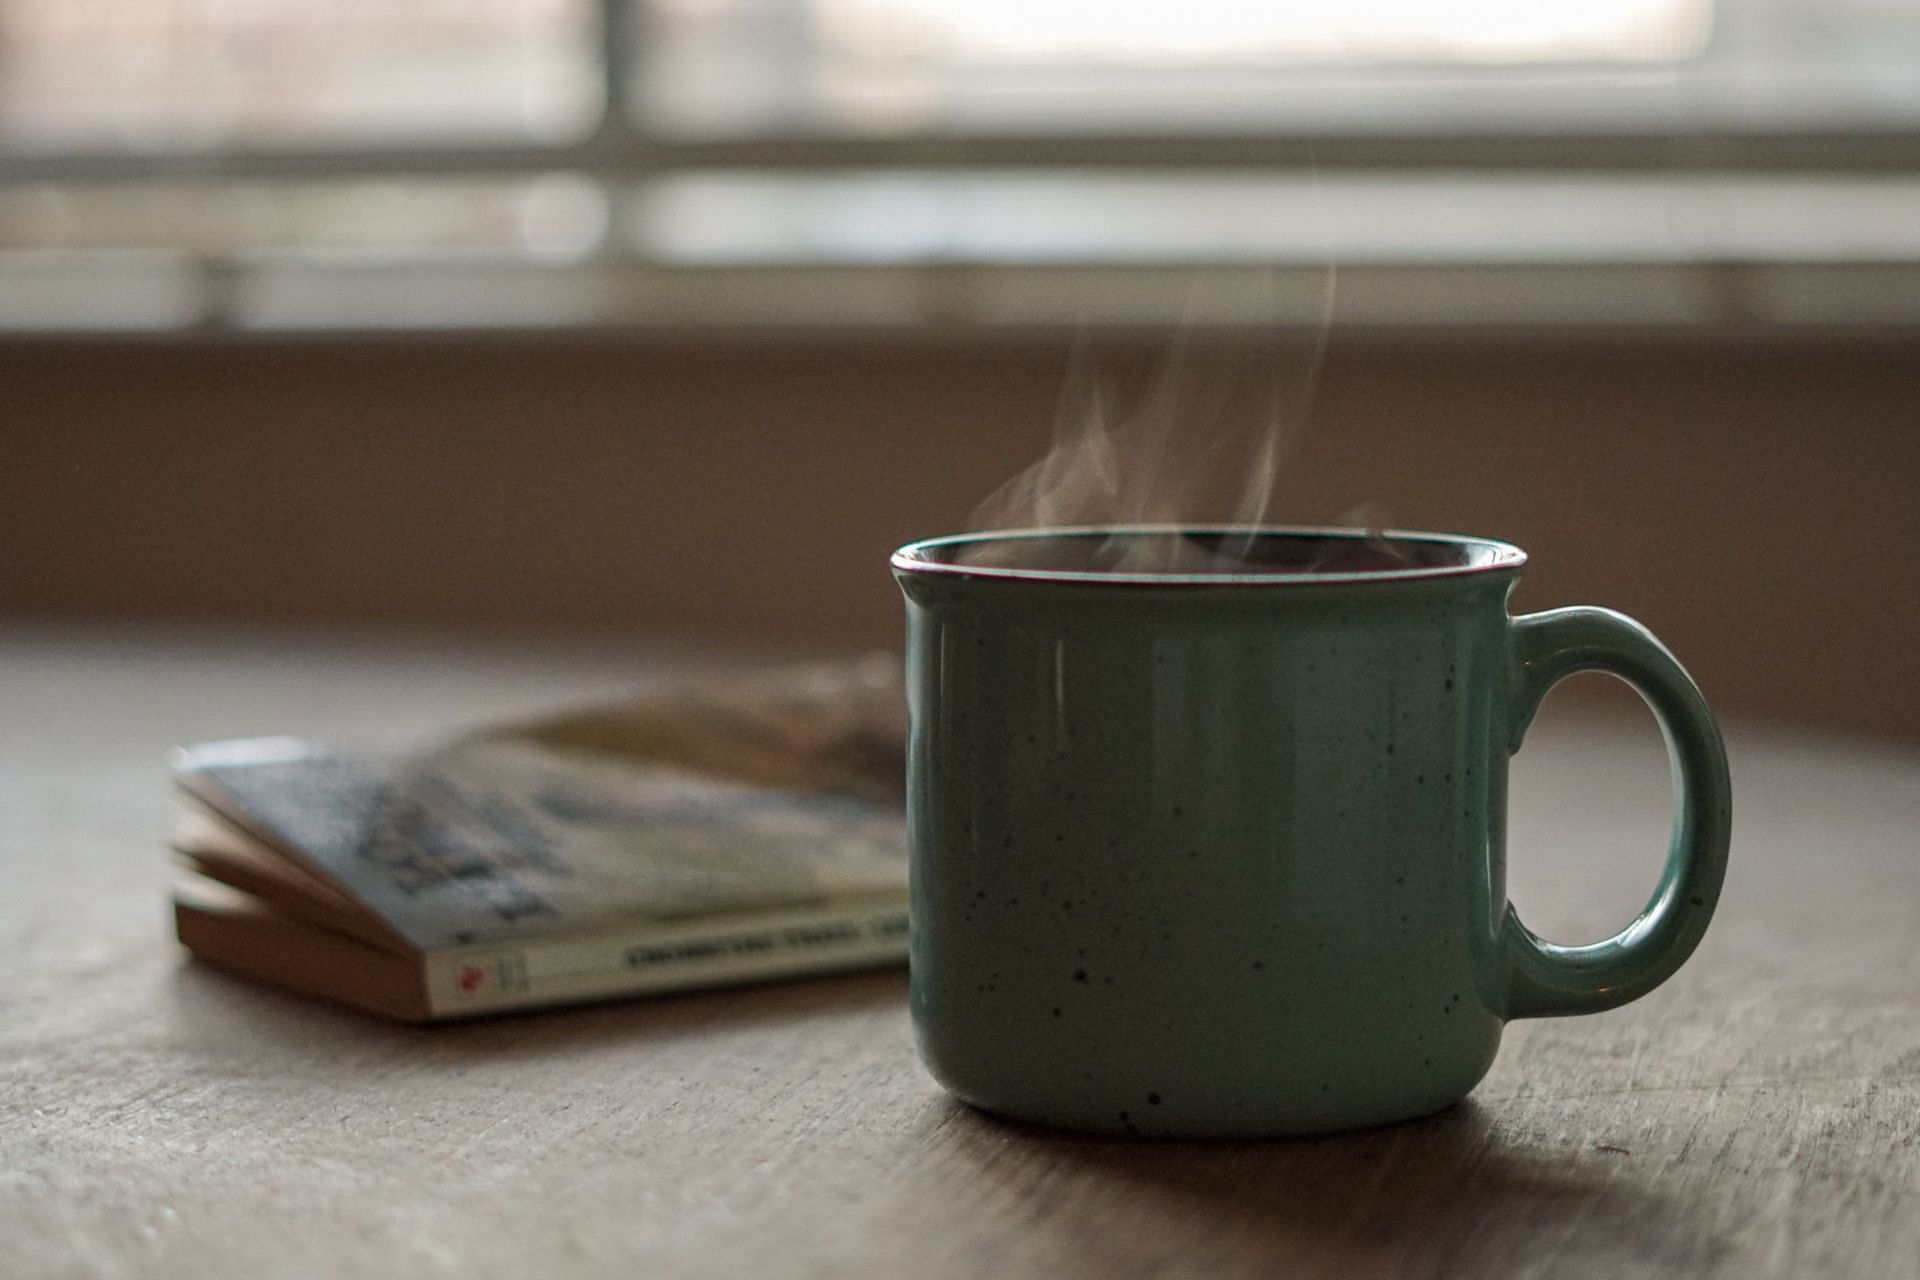 Hot drink (Image via Unsplash/Thomas)